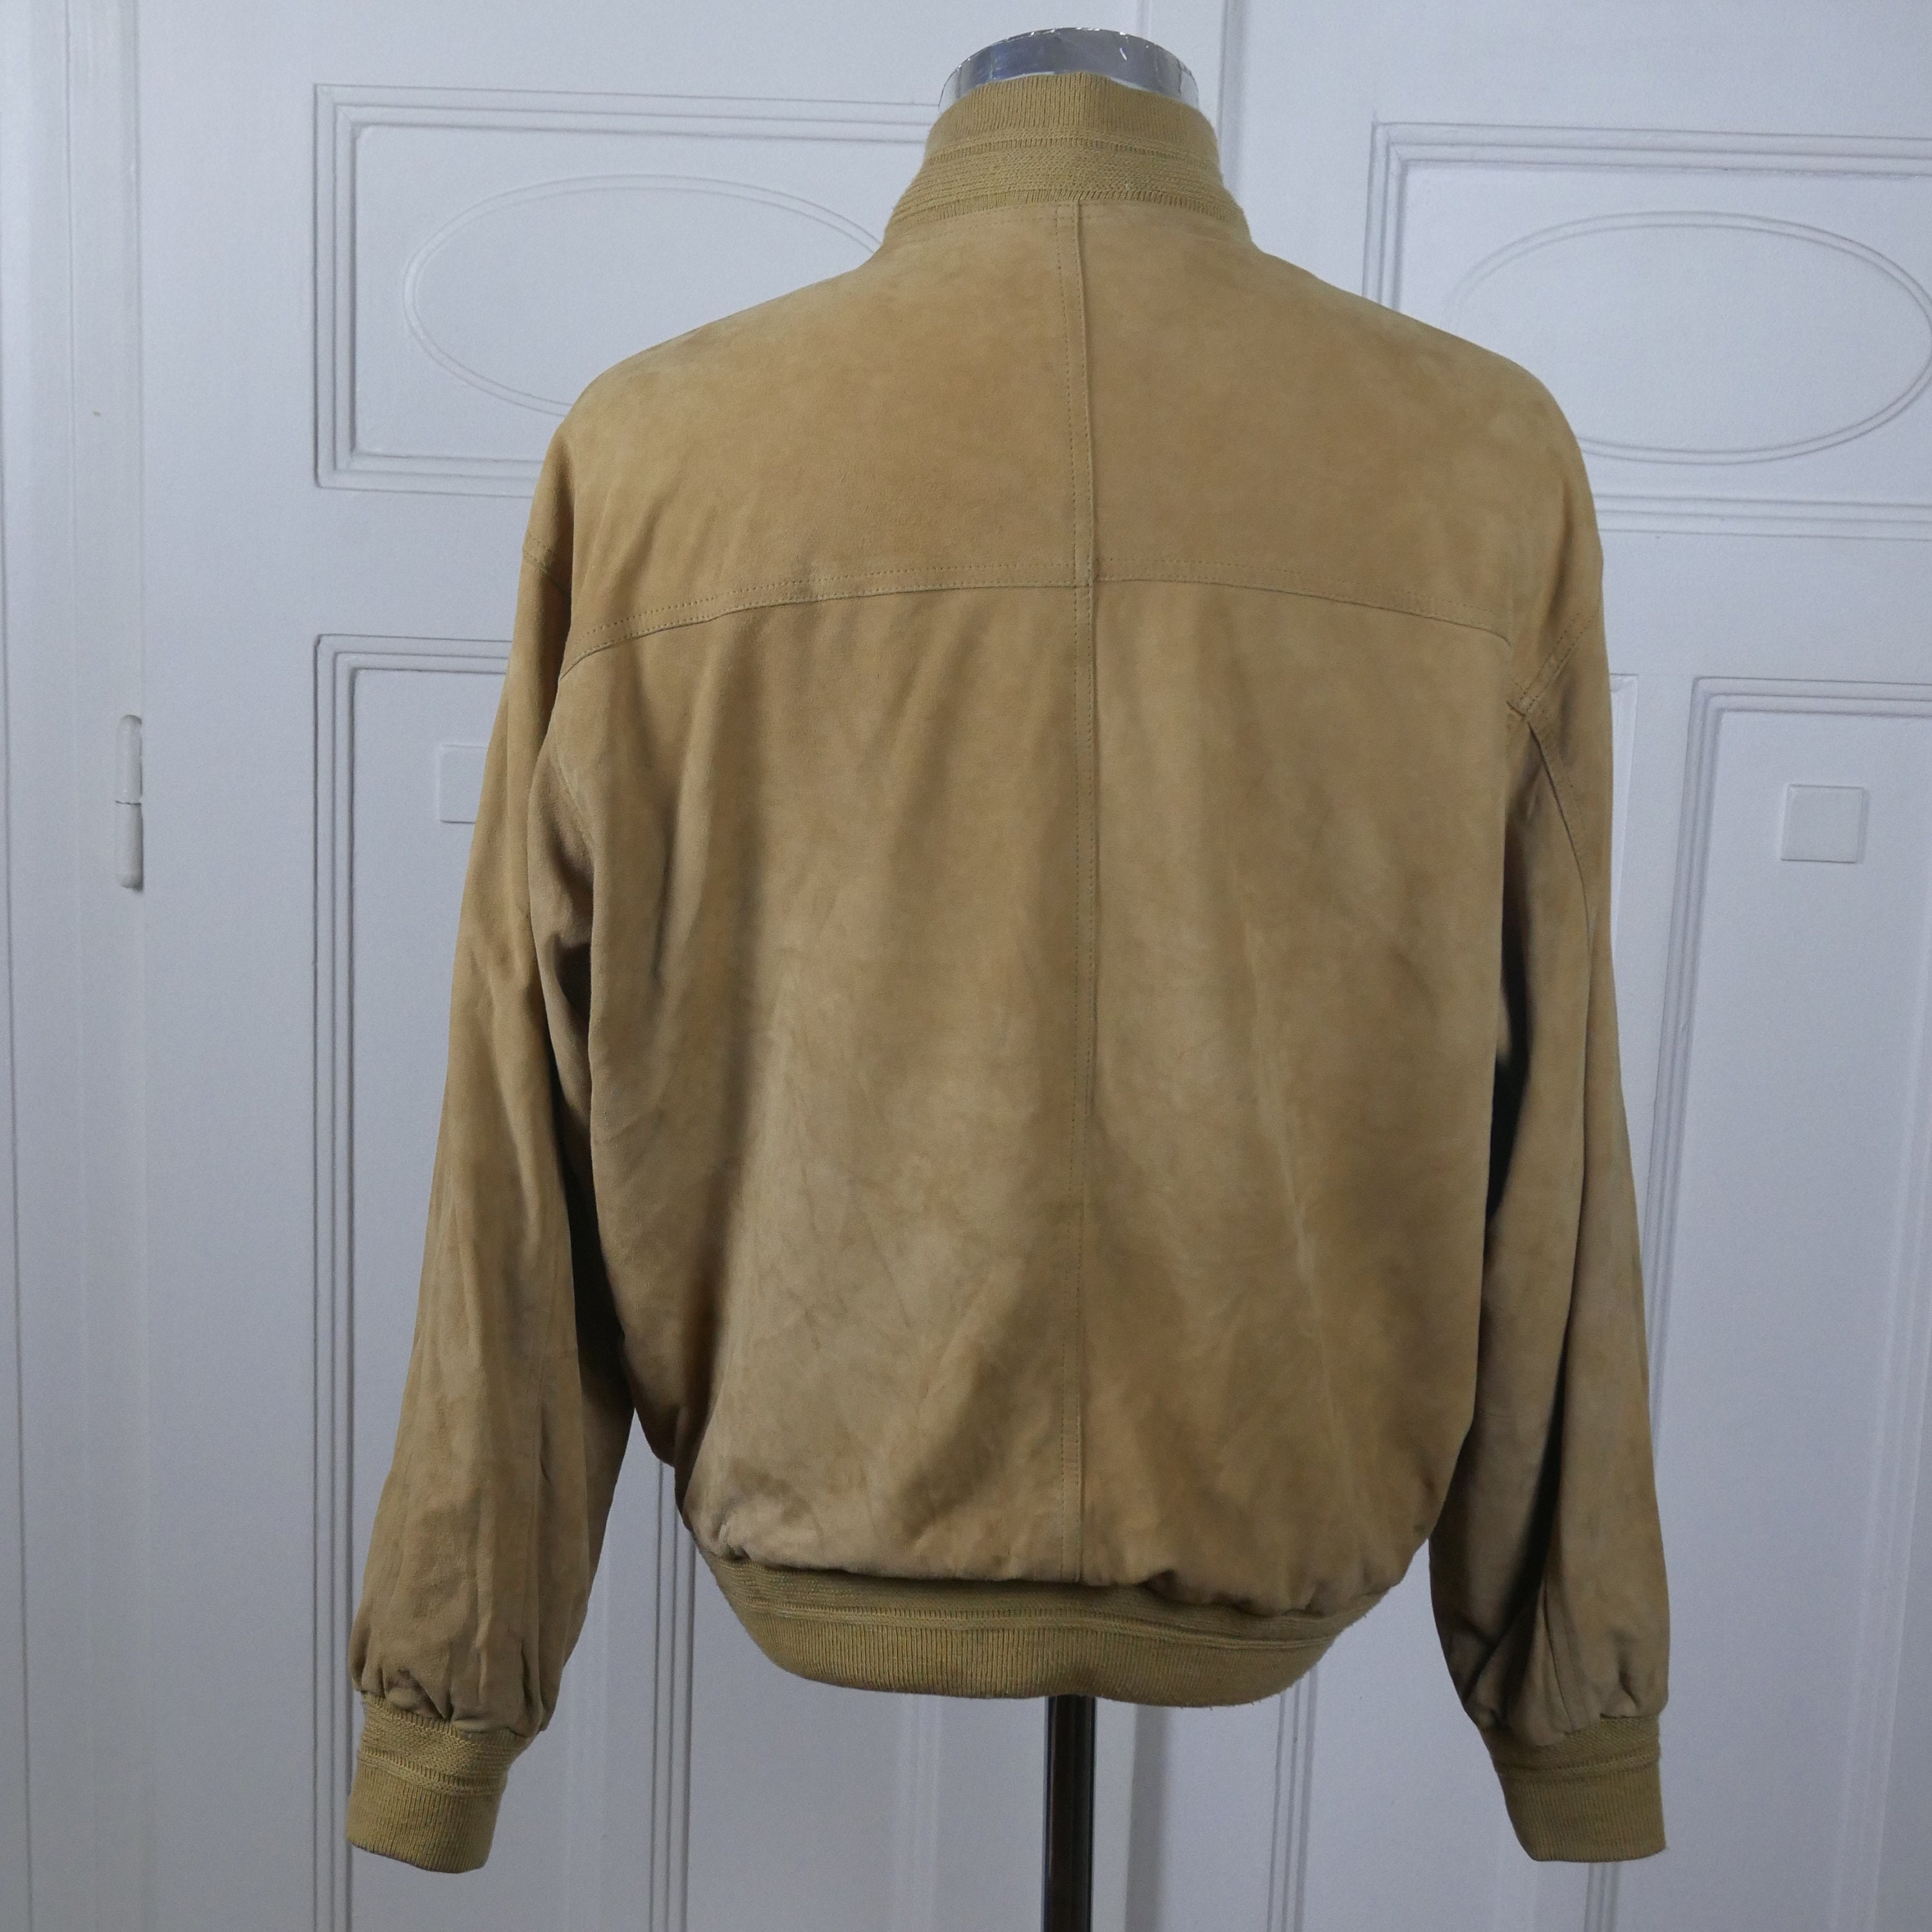 Tan Suede Jacket 1990s European Vintage Cardigan Collegiate | Etsy